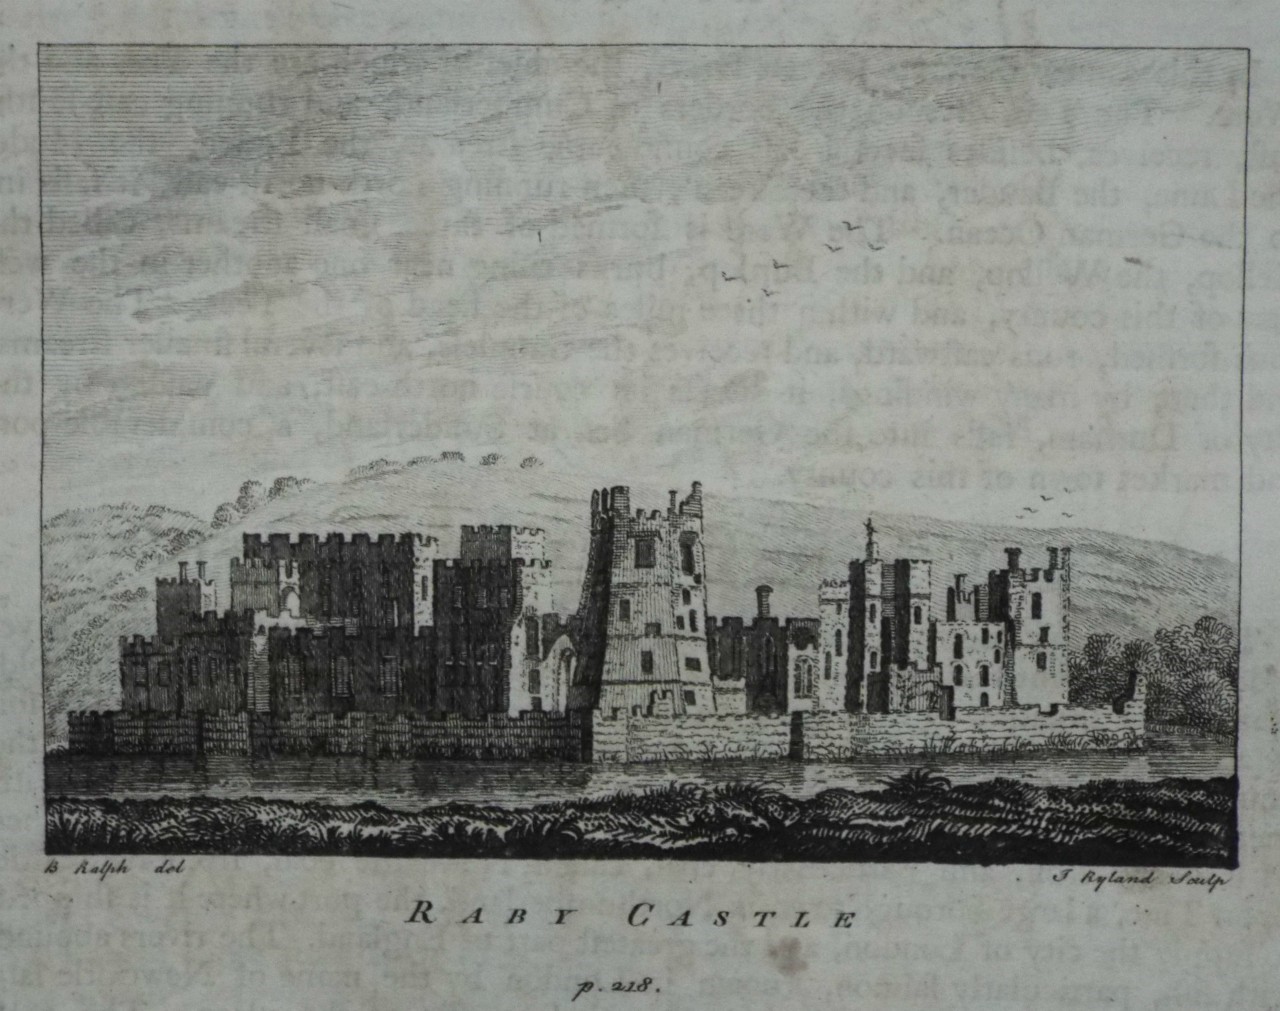 Print - Raby Castle p.218. - Ryland